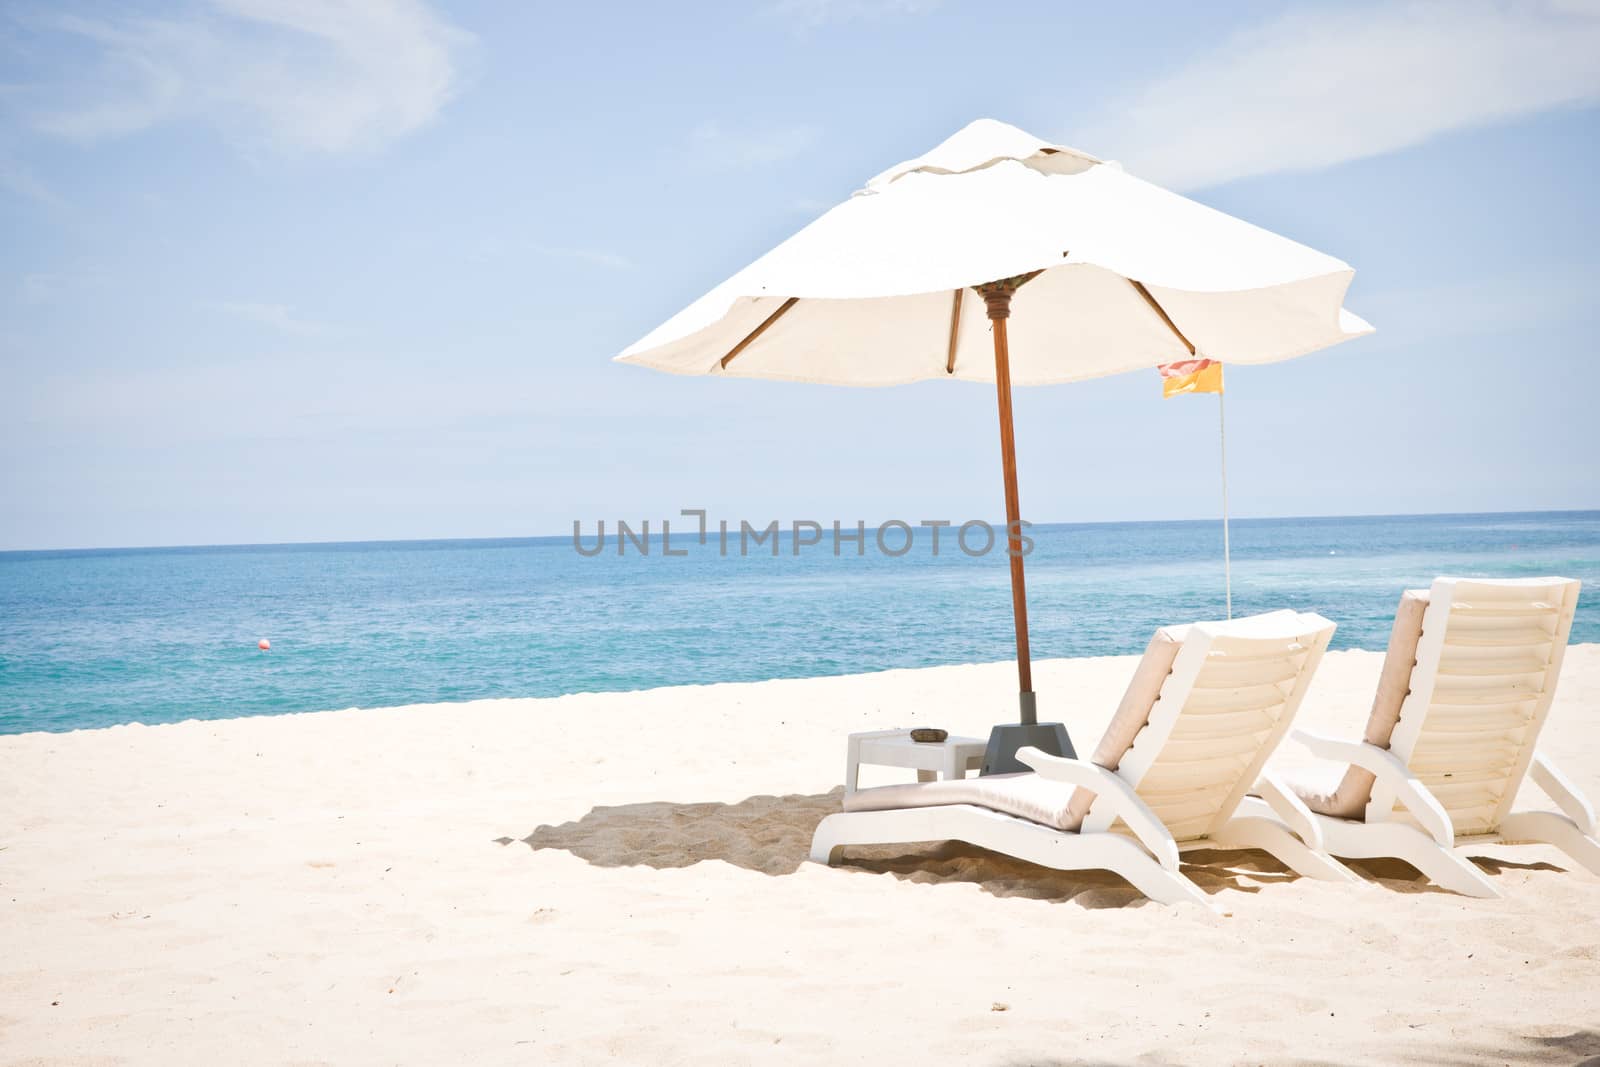 Idyllic beach scene with umbrella and two lounge chairs